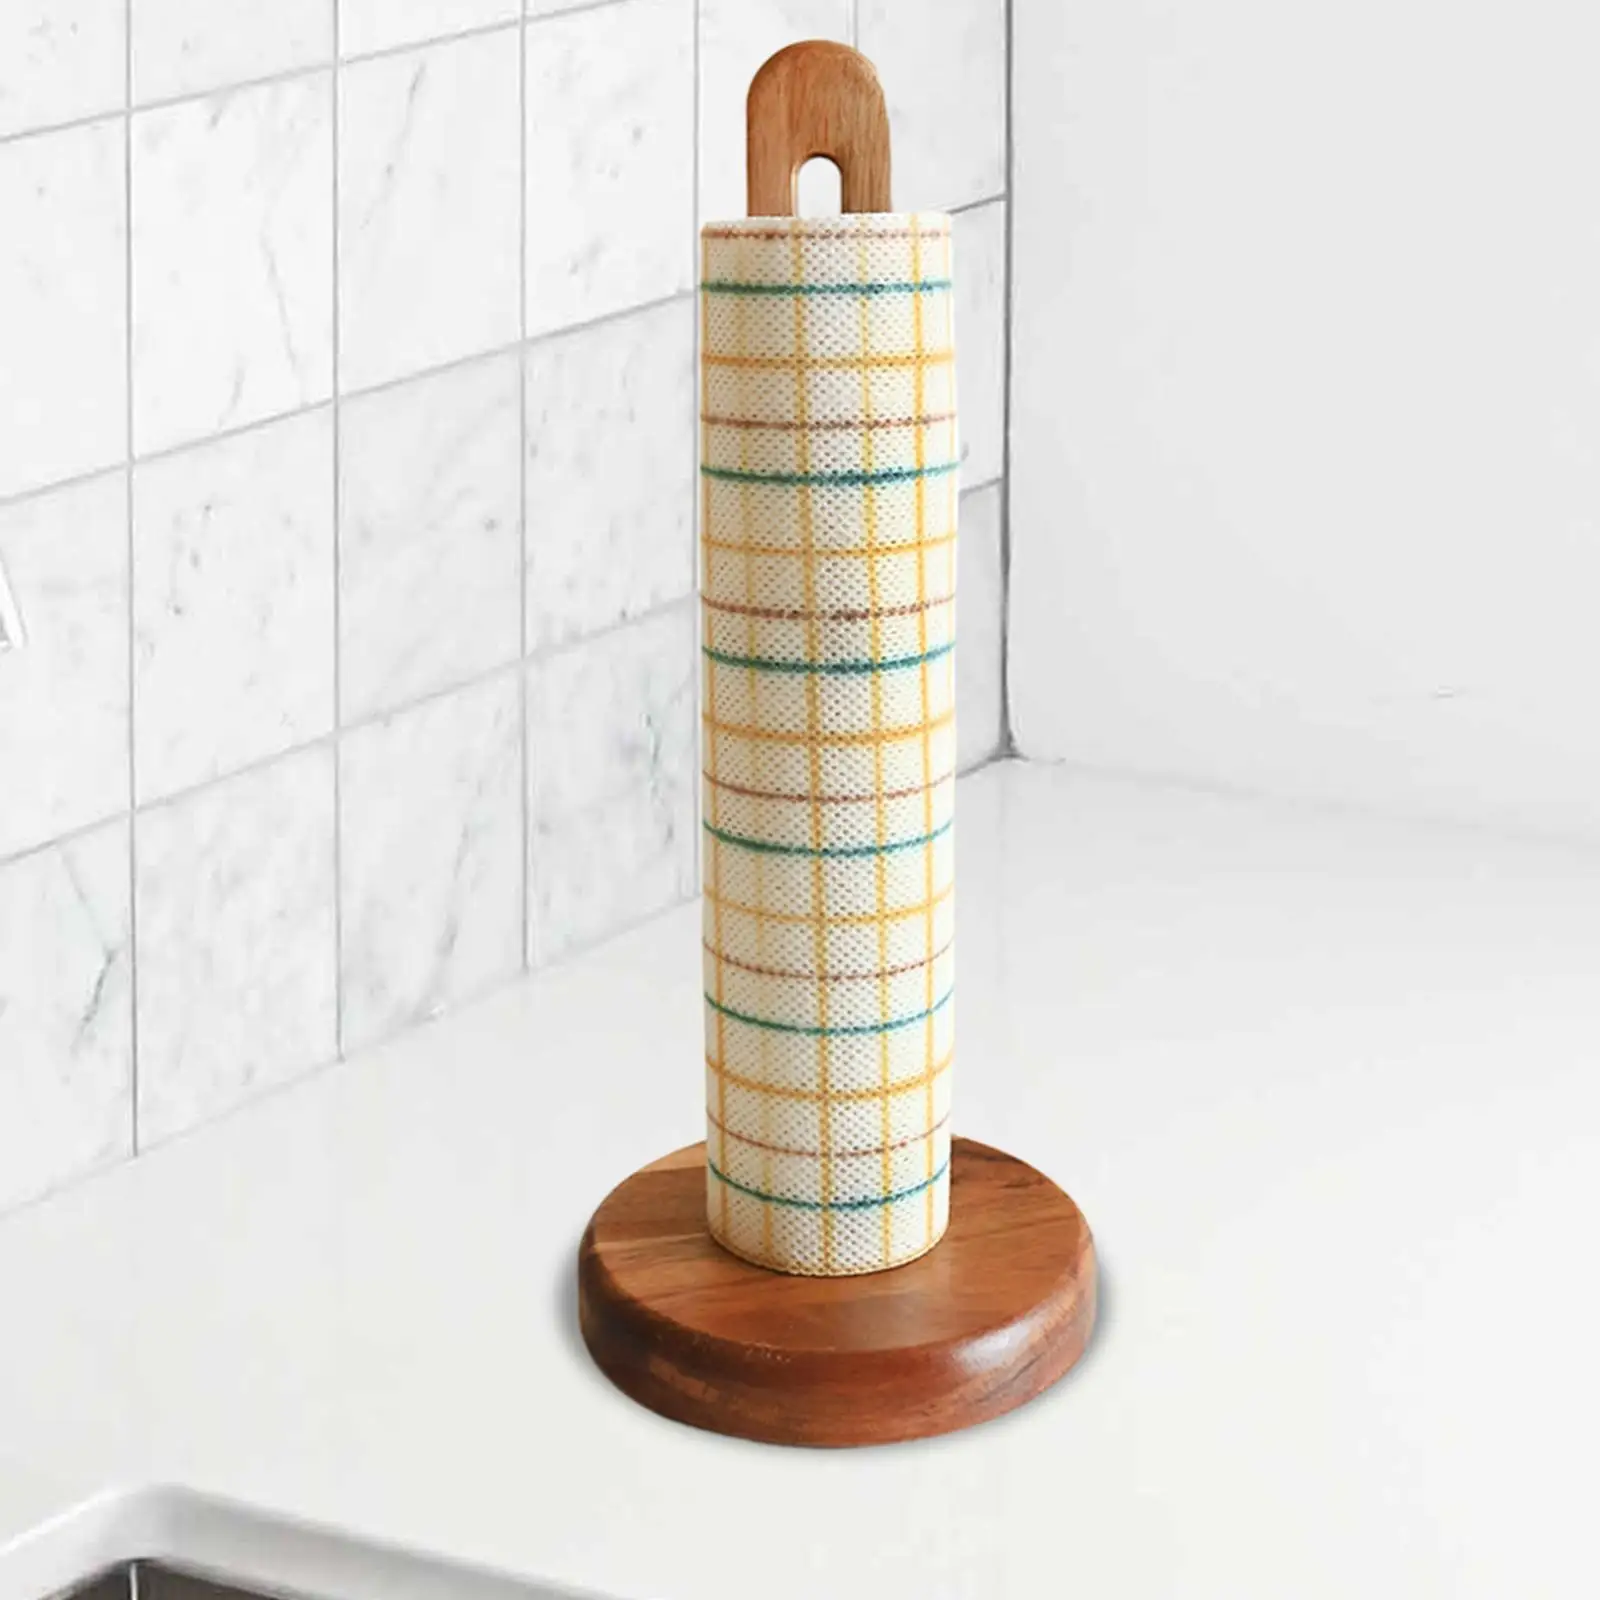 Toilet Paper Holder Wear Resistant Saving Space Towel Rack Wood Yarn Ball Holder for Bathroom Washroom Office Restaurant Kitchen